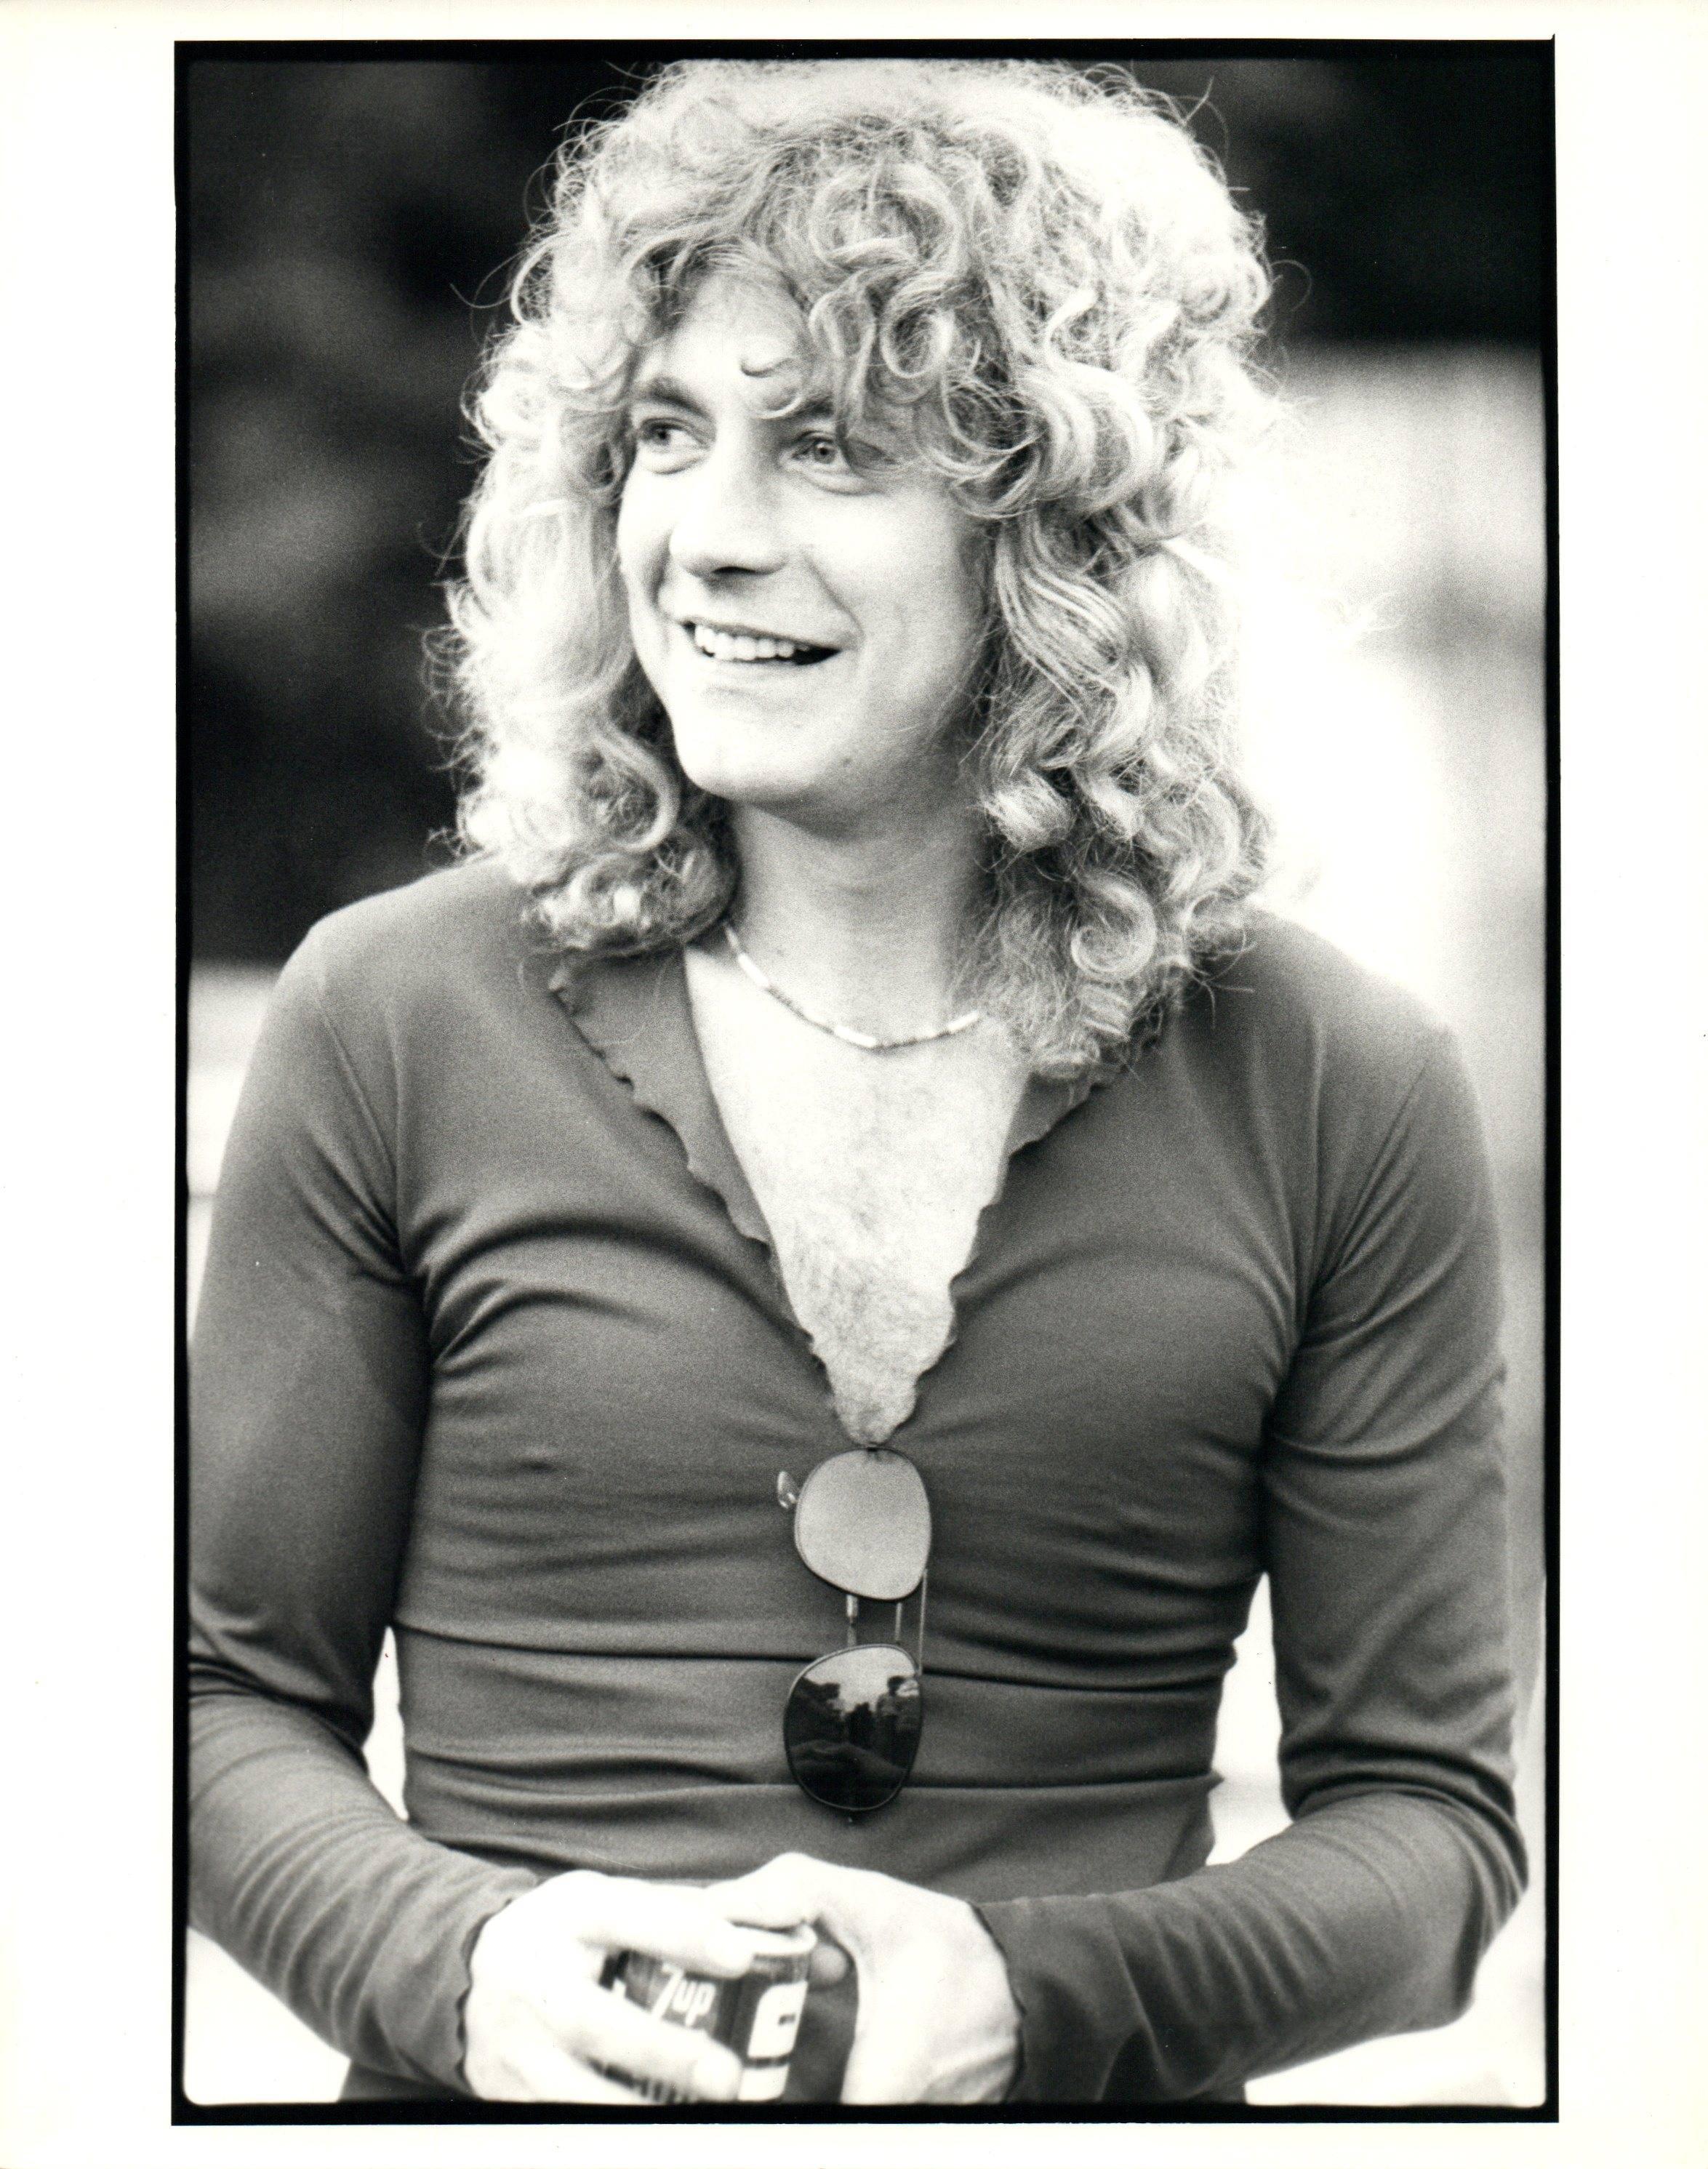 Simon Fowler Portrait Photograph - Robert Plant Backstage at the Knebworth Festival Vintage Original Photograph